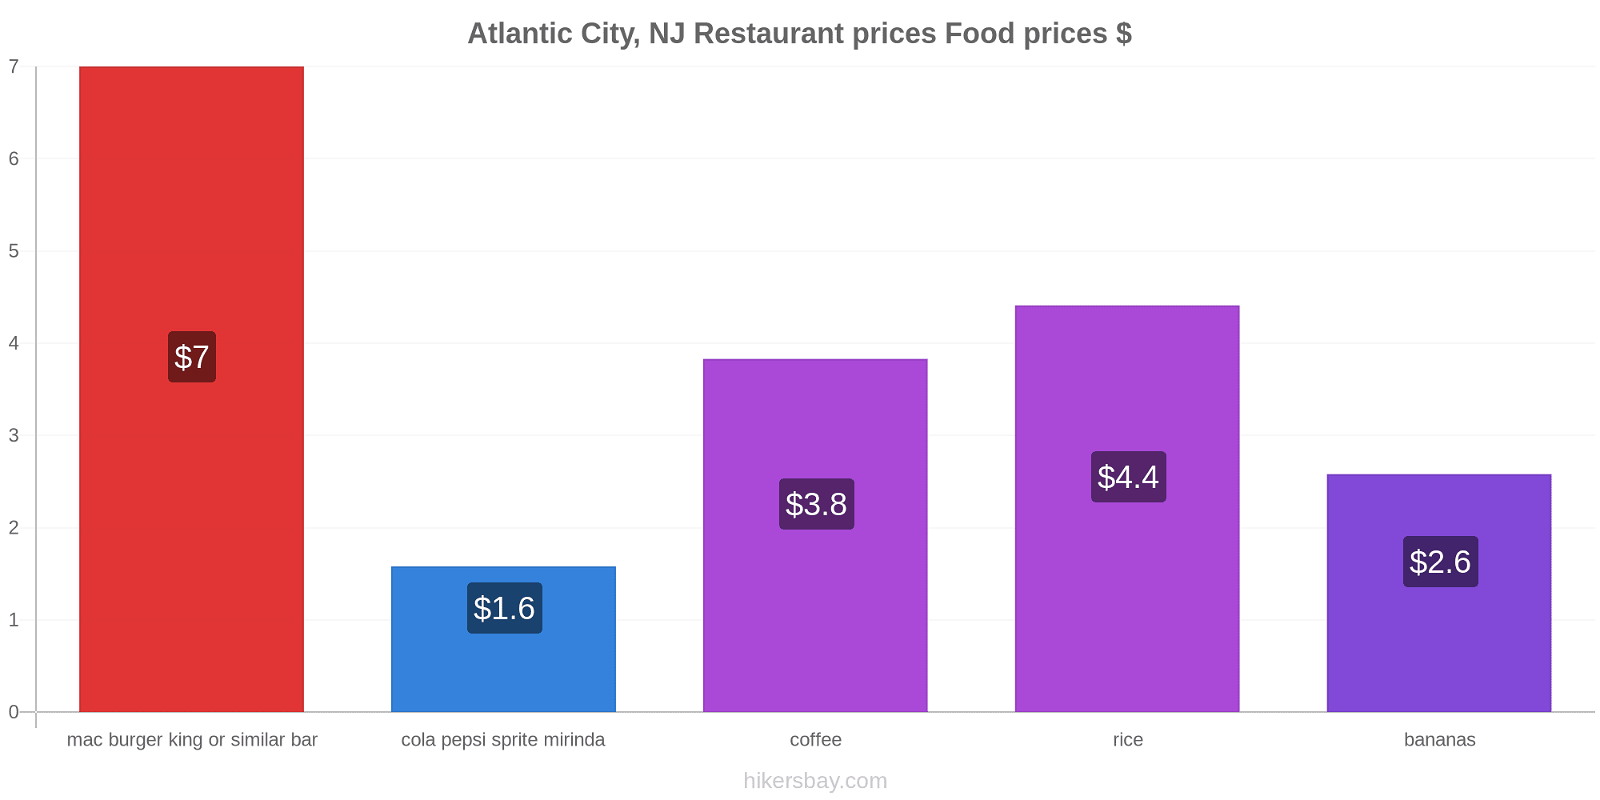 Atlantic City, NJ price changes hikersbay.com